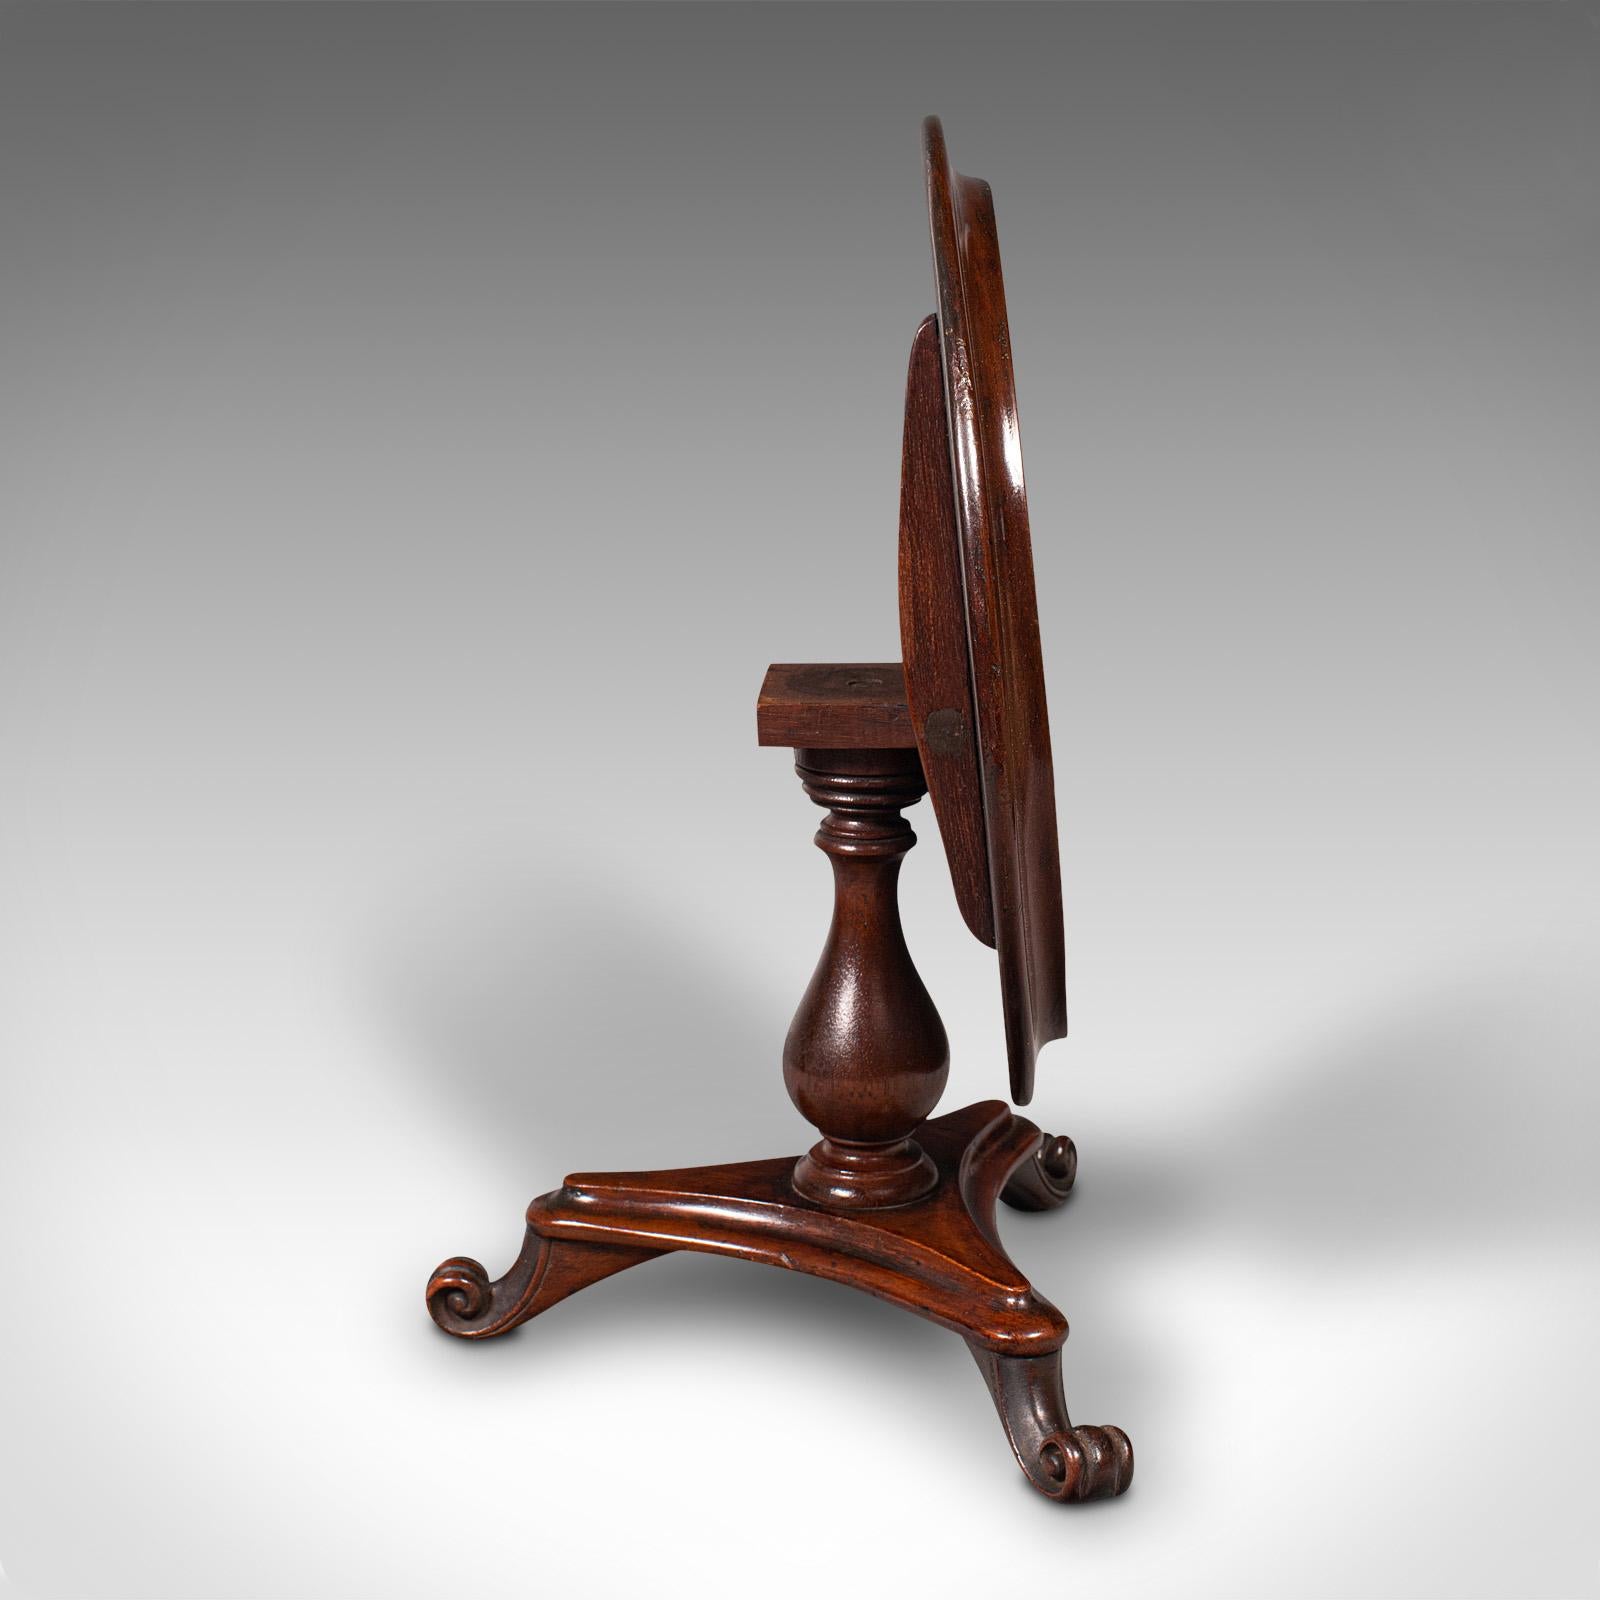 19th Century Small Antique Apprentice Table, English Miniature Furniture, Tilt Top, Victorian